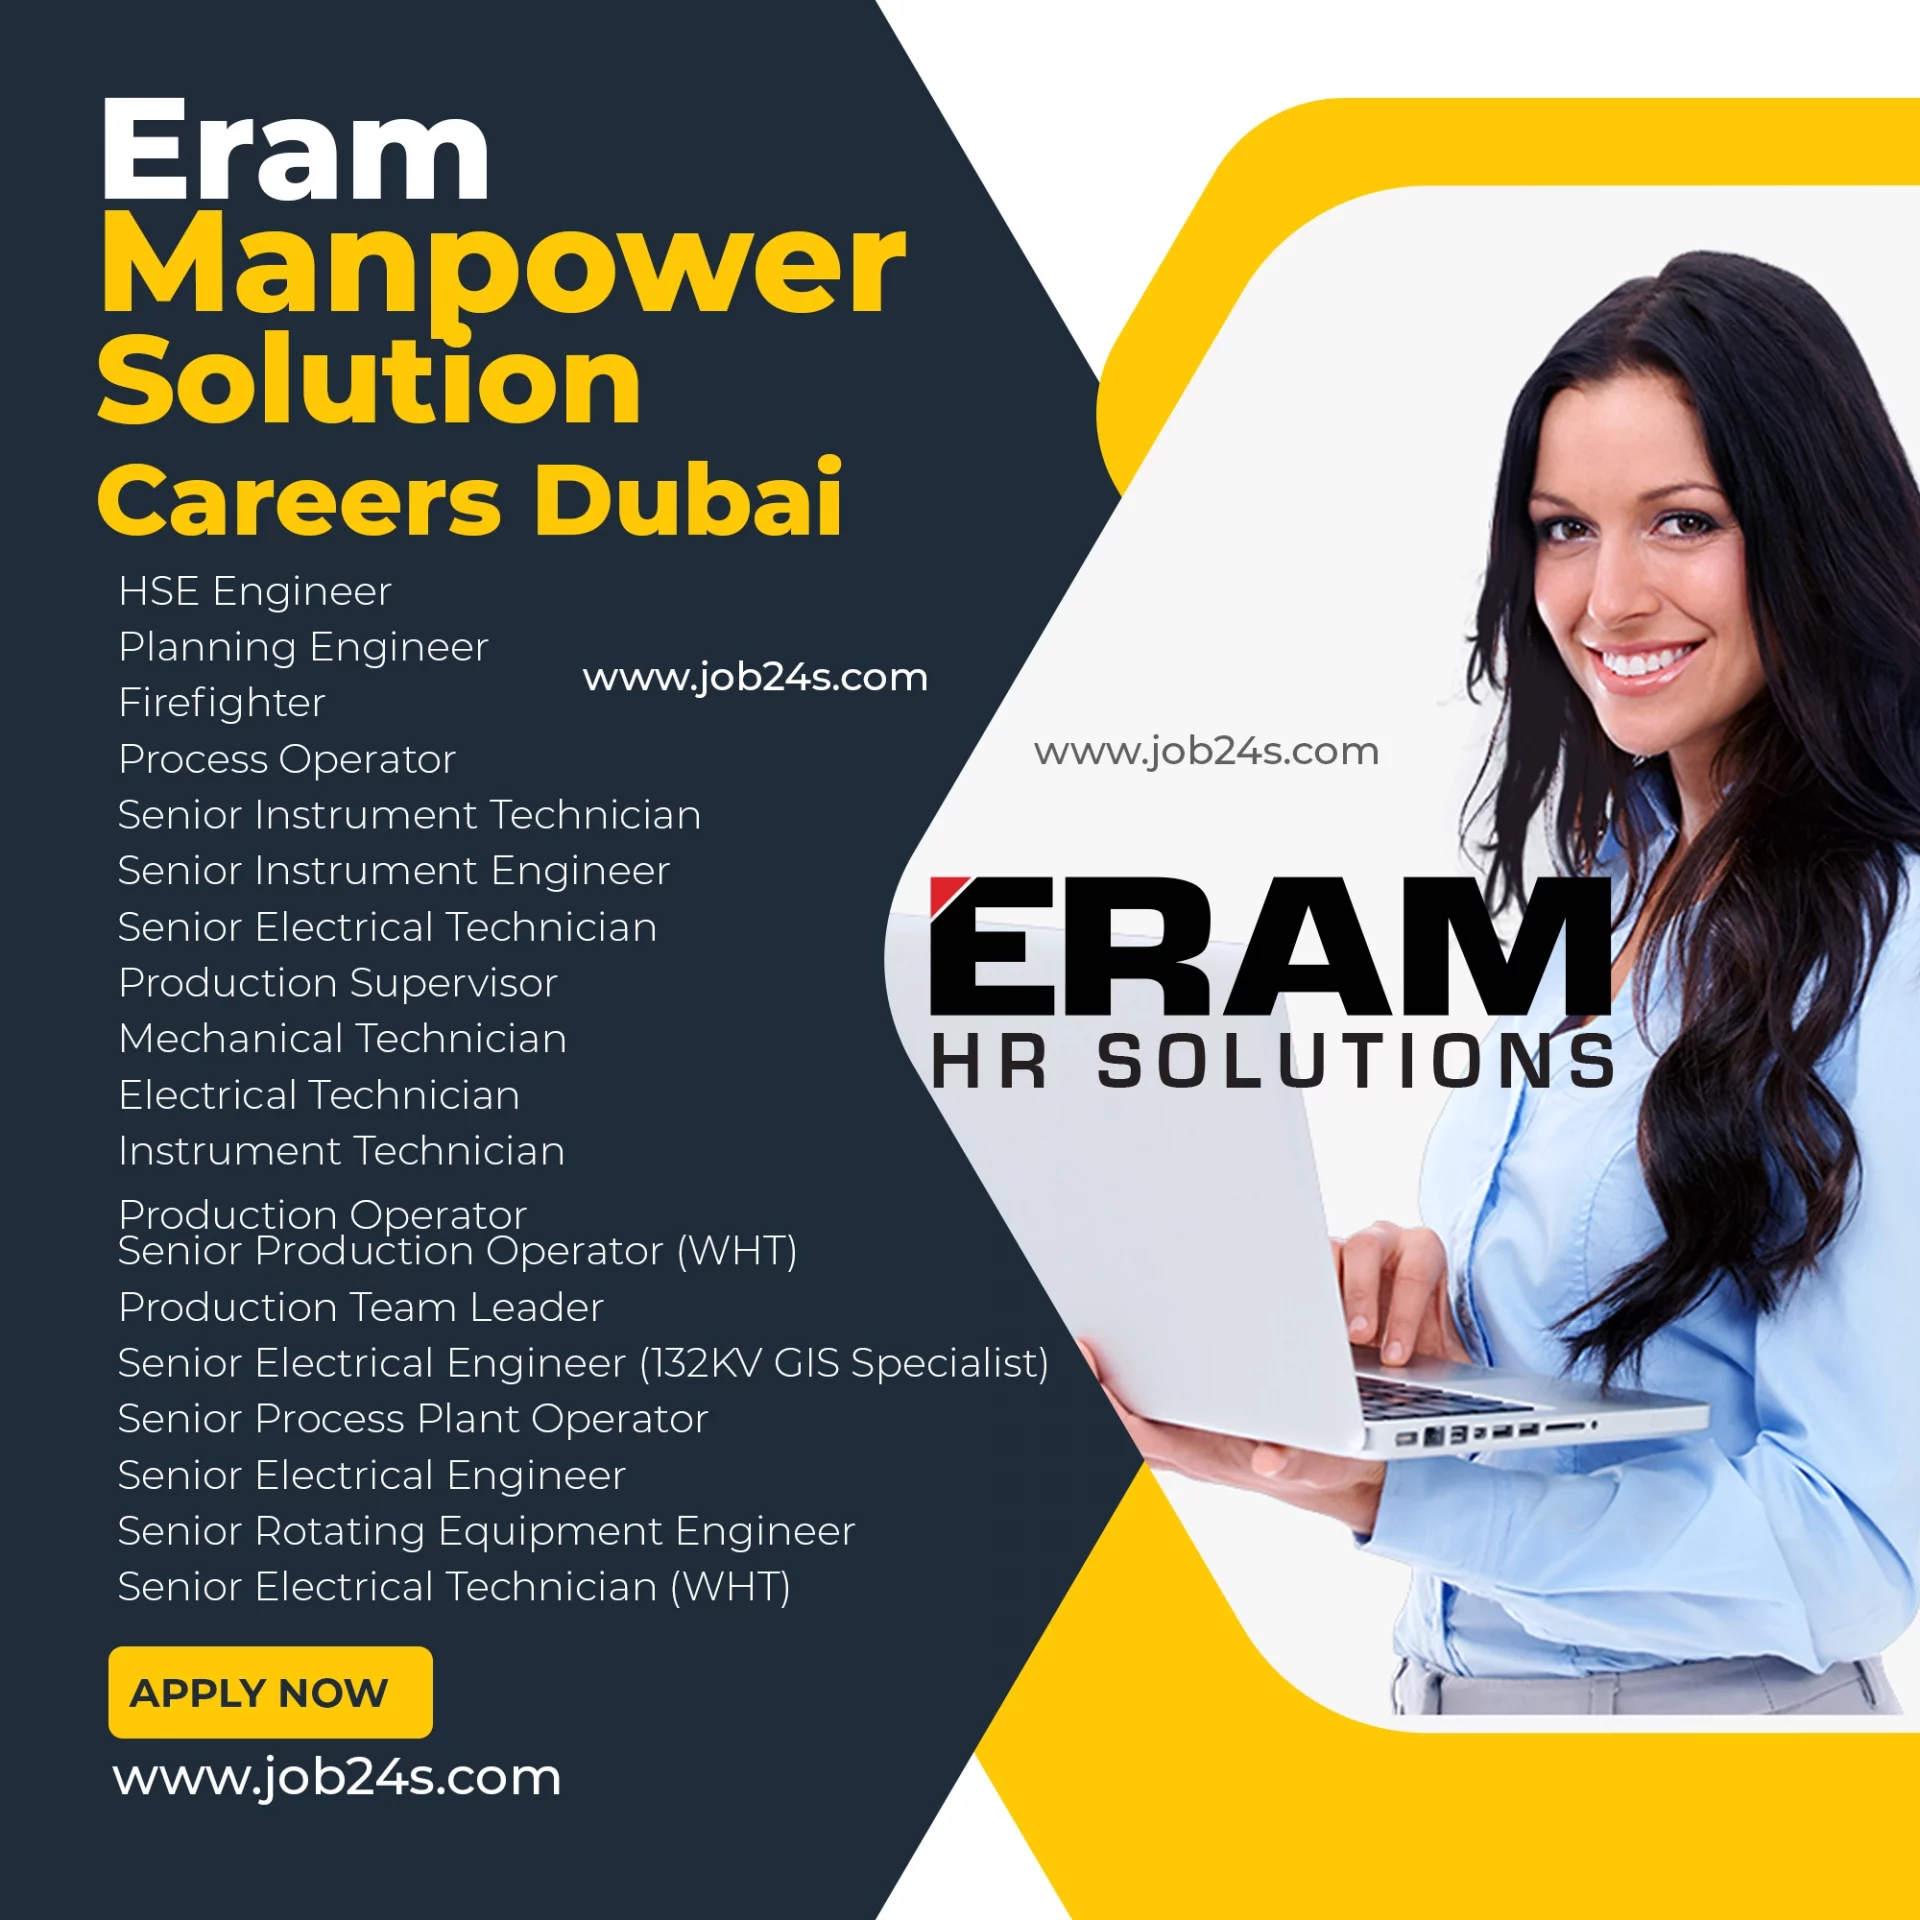 Eram Manpower Solution Careers Dubai- Latest Vacancy 2022